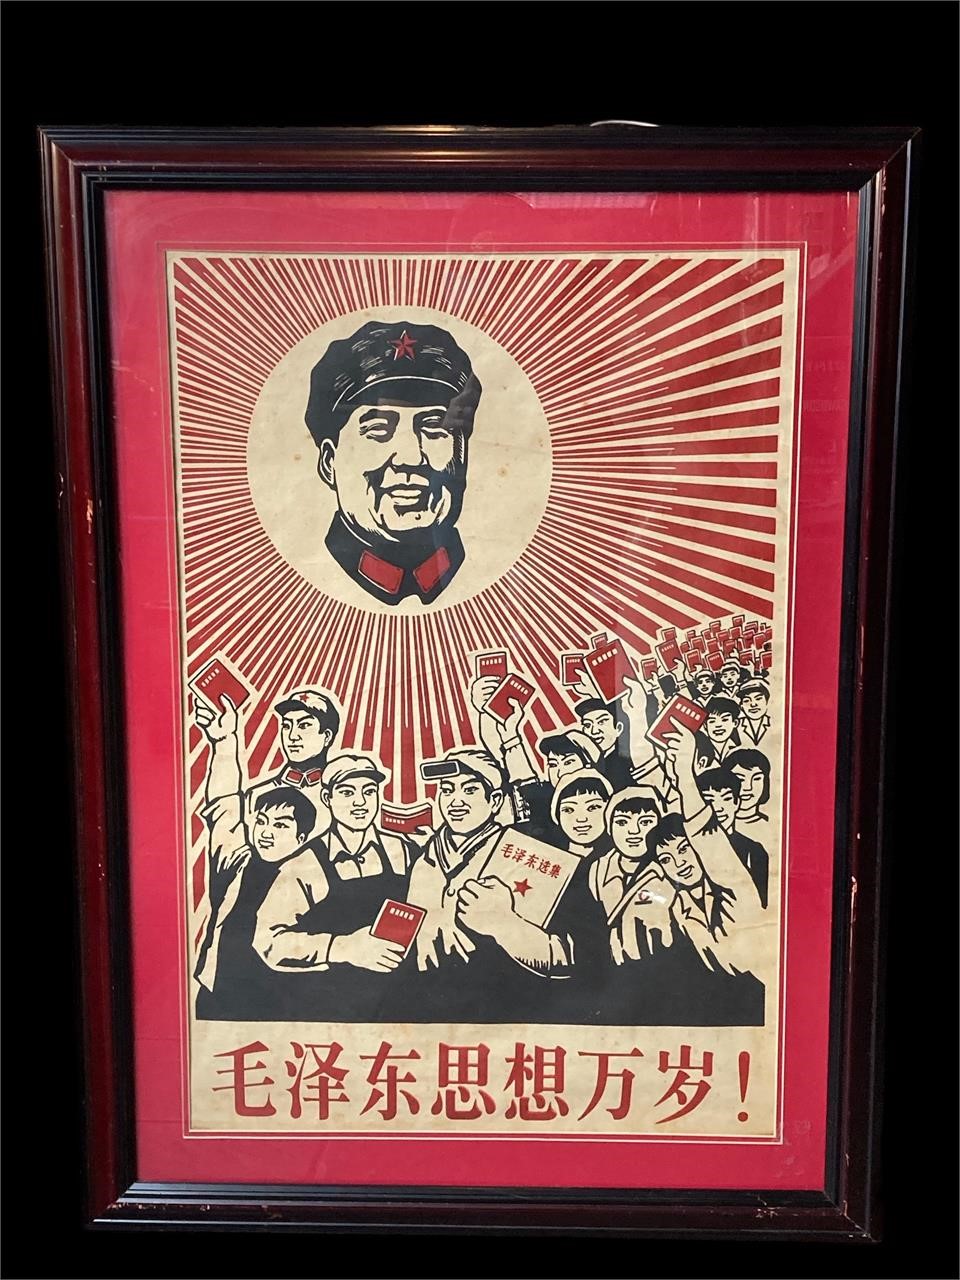 Framed 24x36” “Long Live Mao’s Theory” Print